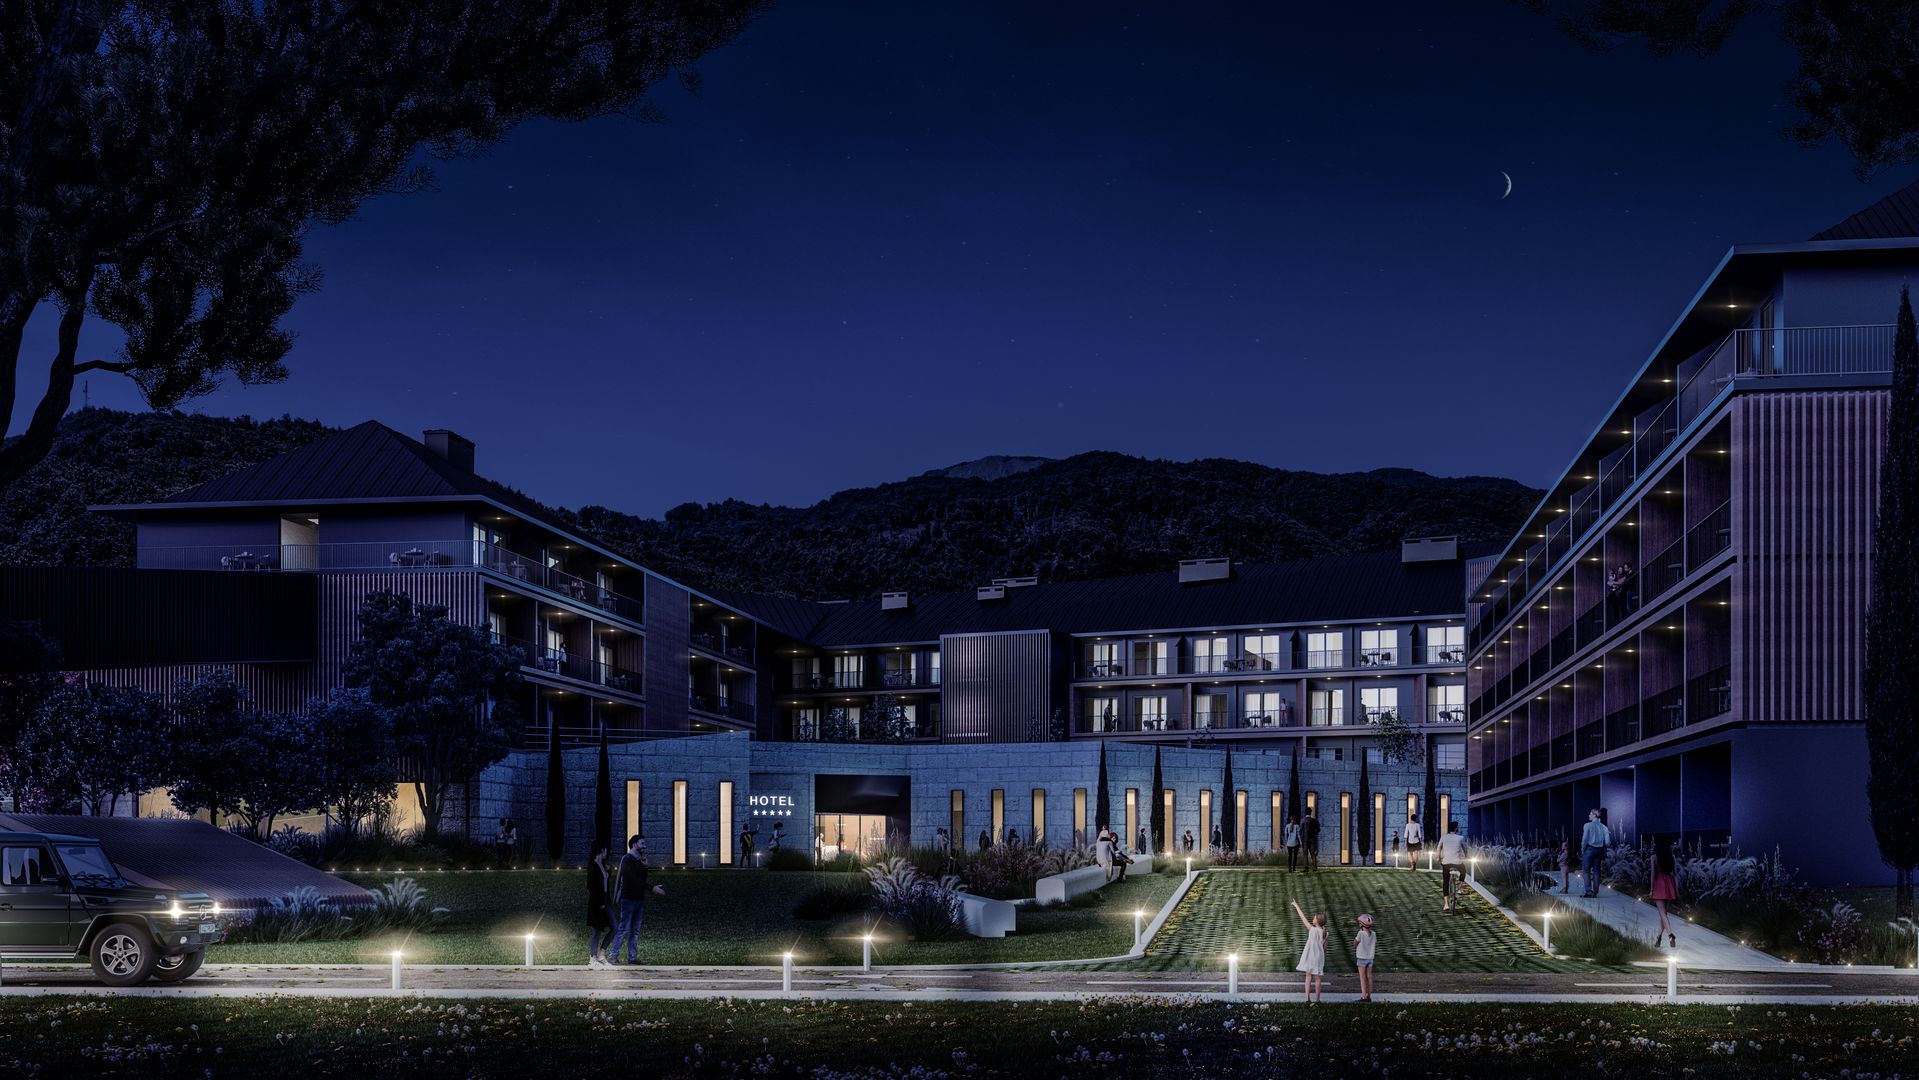 Montis mountain resort by splendid циан недвижимость за рубежом